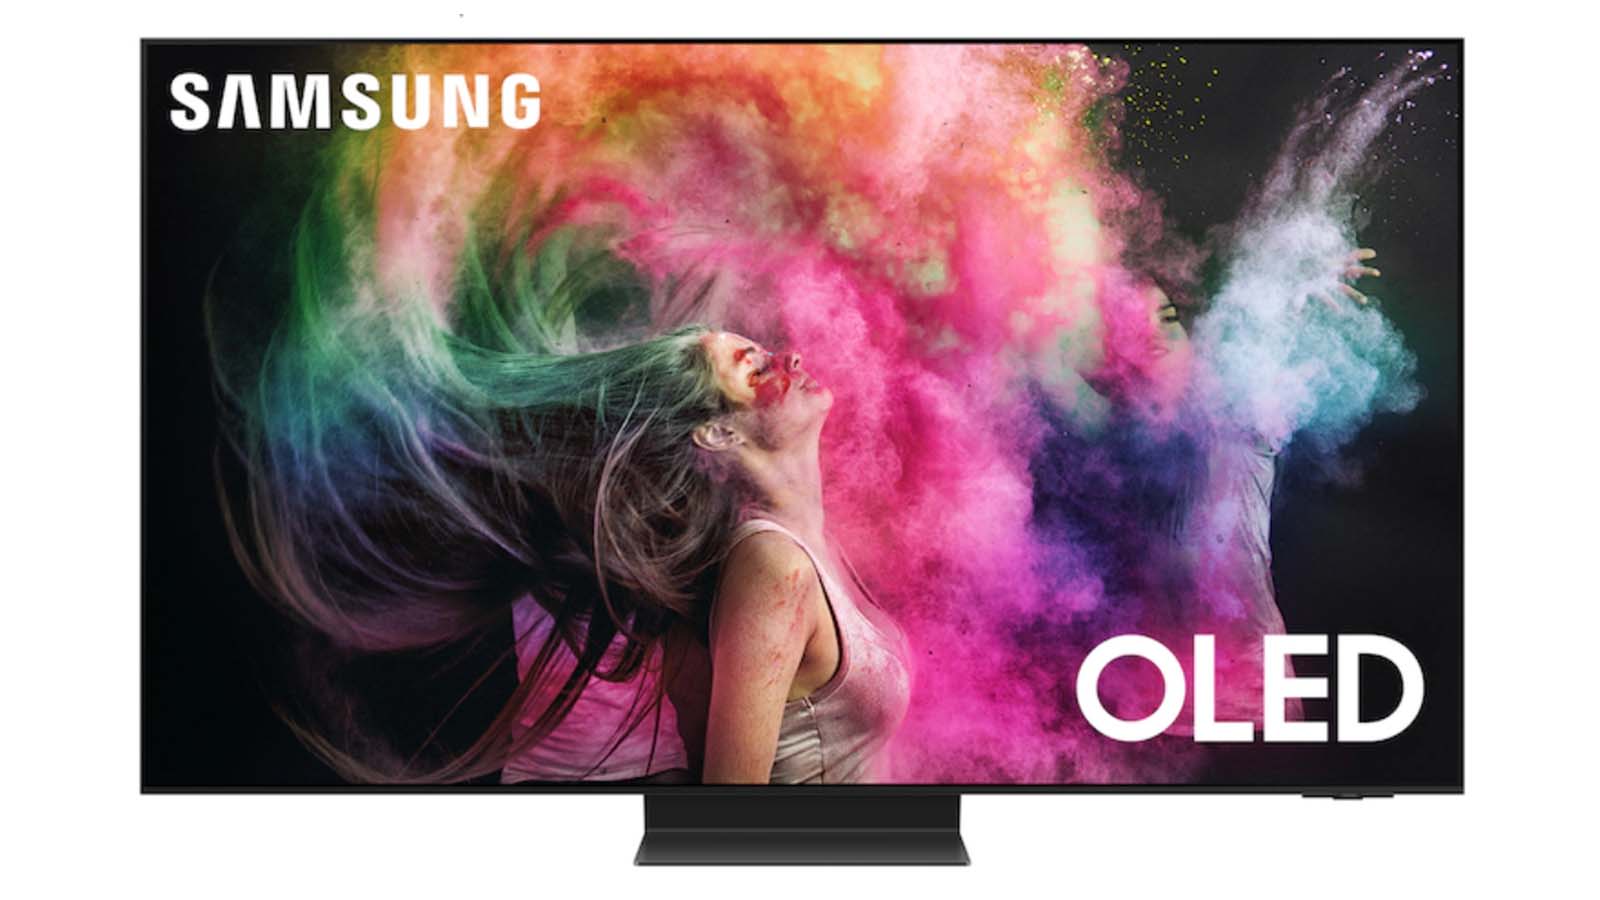 Televisores y Smart TVs: OLED, QLED, LED, 4K